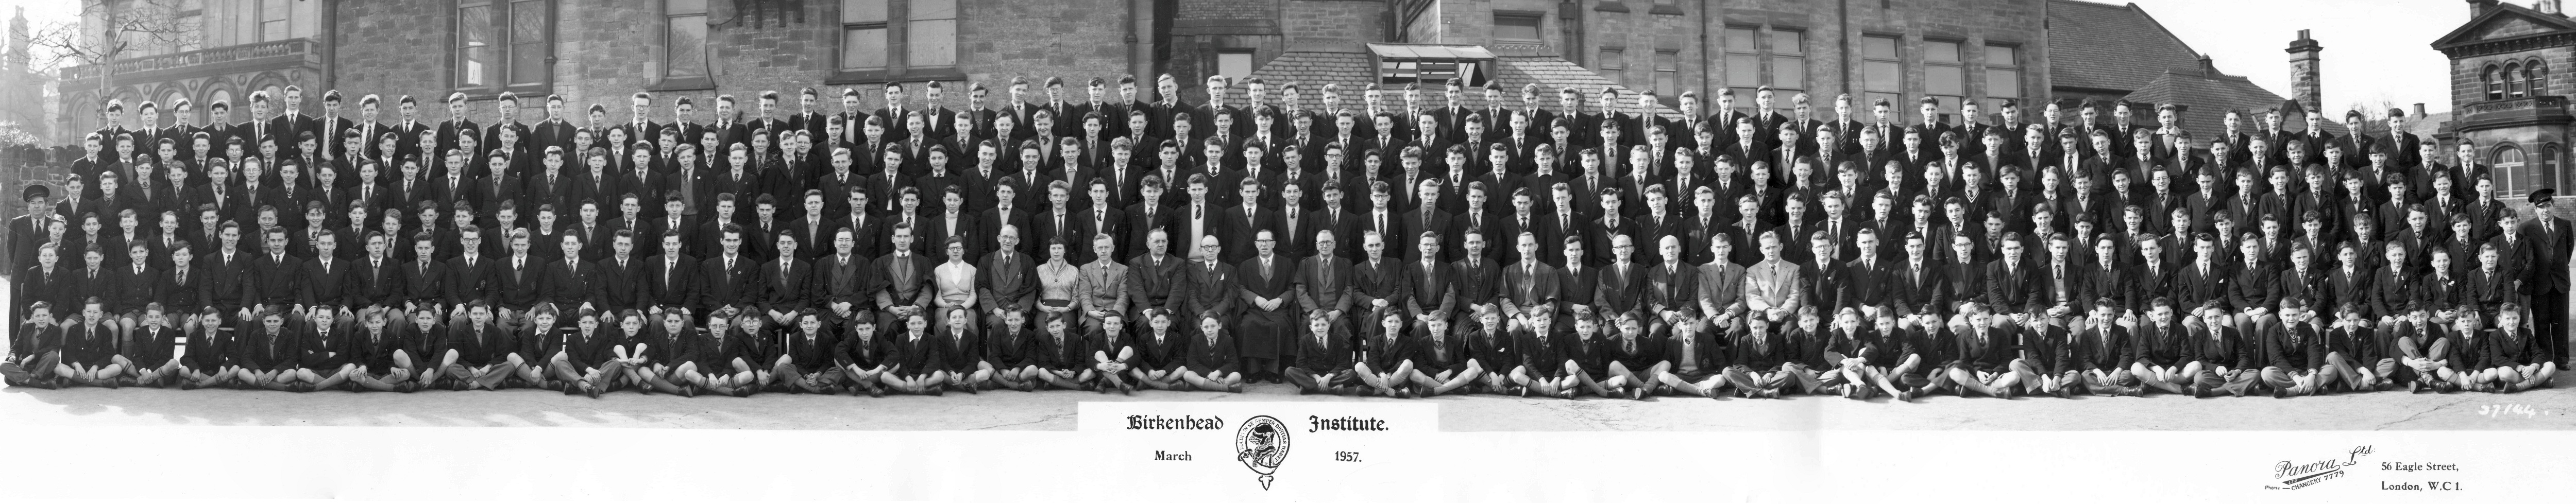 Whole School Photograph - 1957